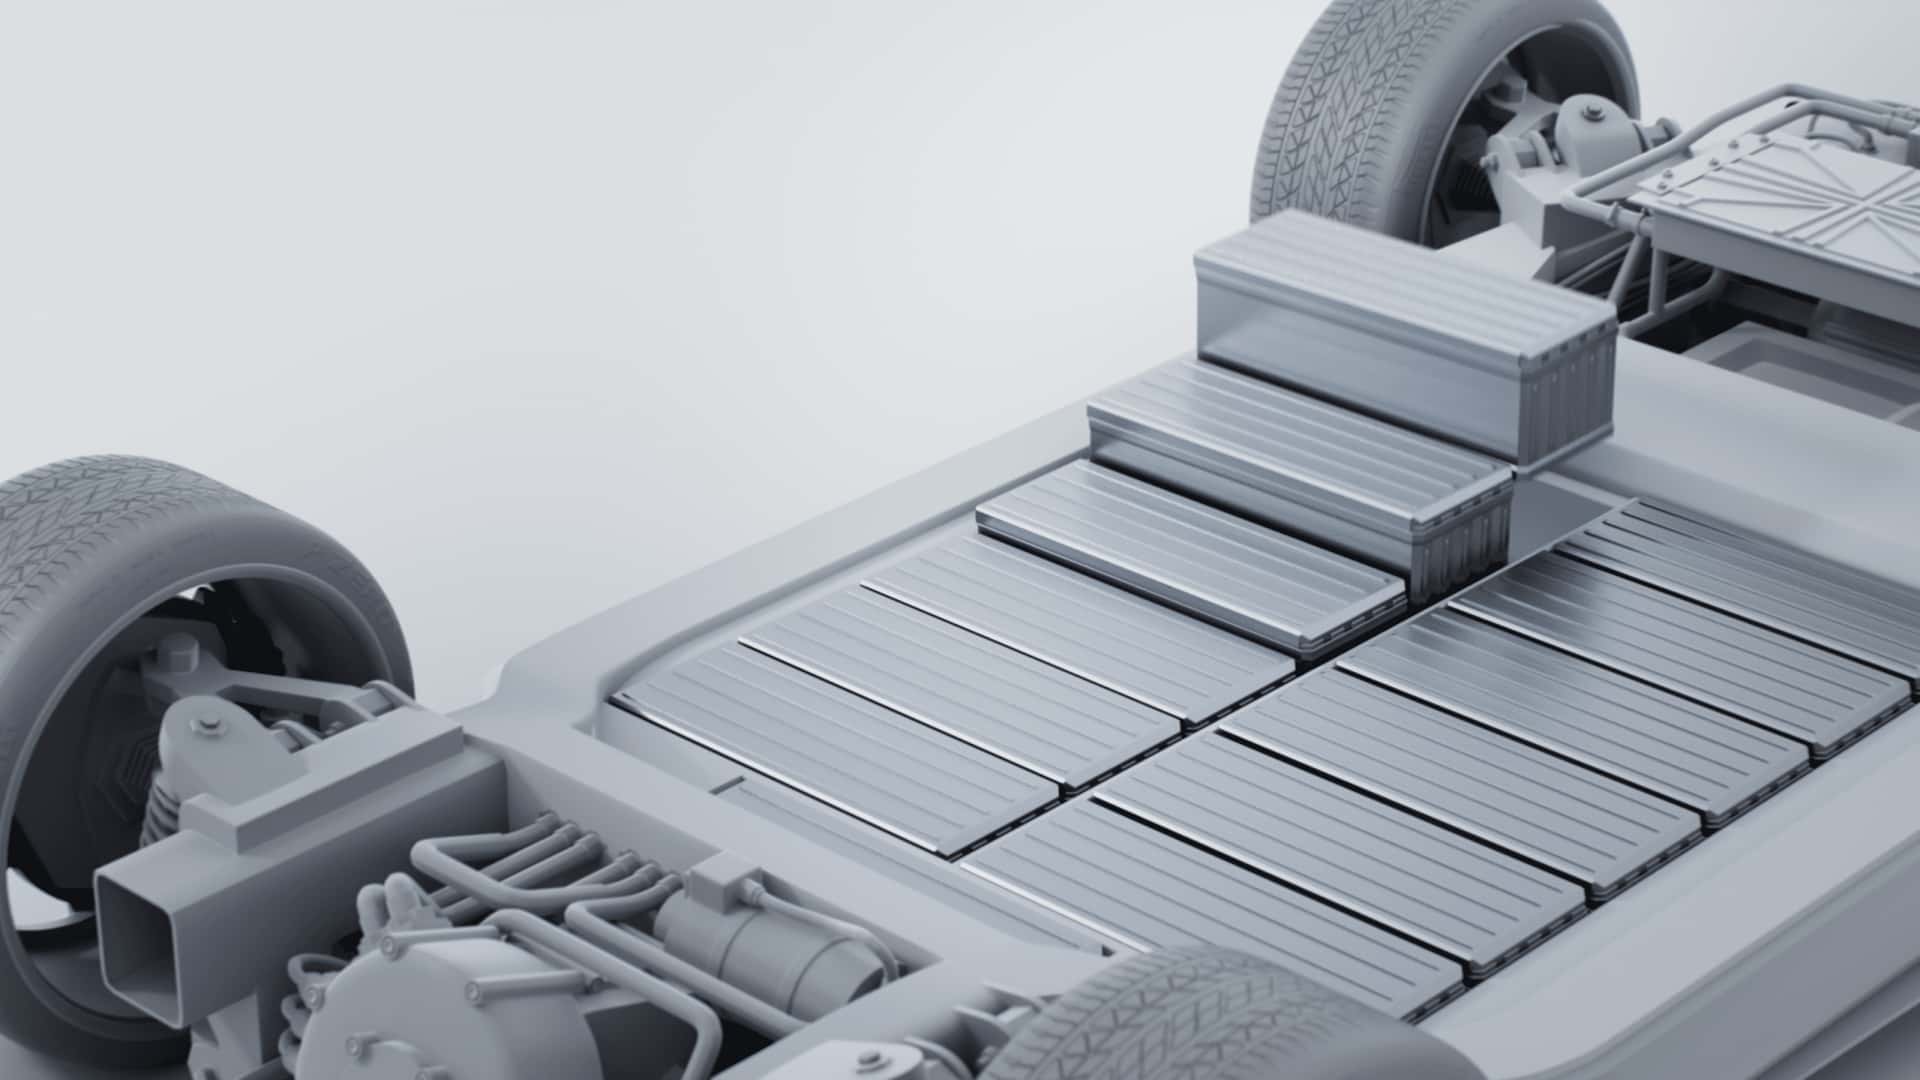 VW وعدہ کرتا ہے کہ سالڈ سٹیٹ بیٹریوں کے ساتھ 'رینج کا قابل توجہ نقصان' نہیں ہے۔